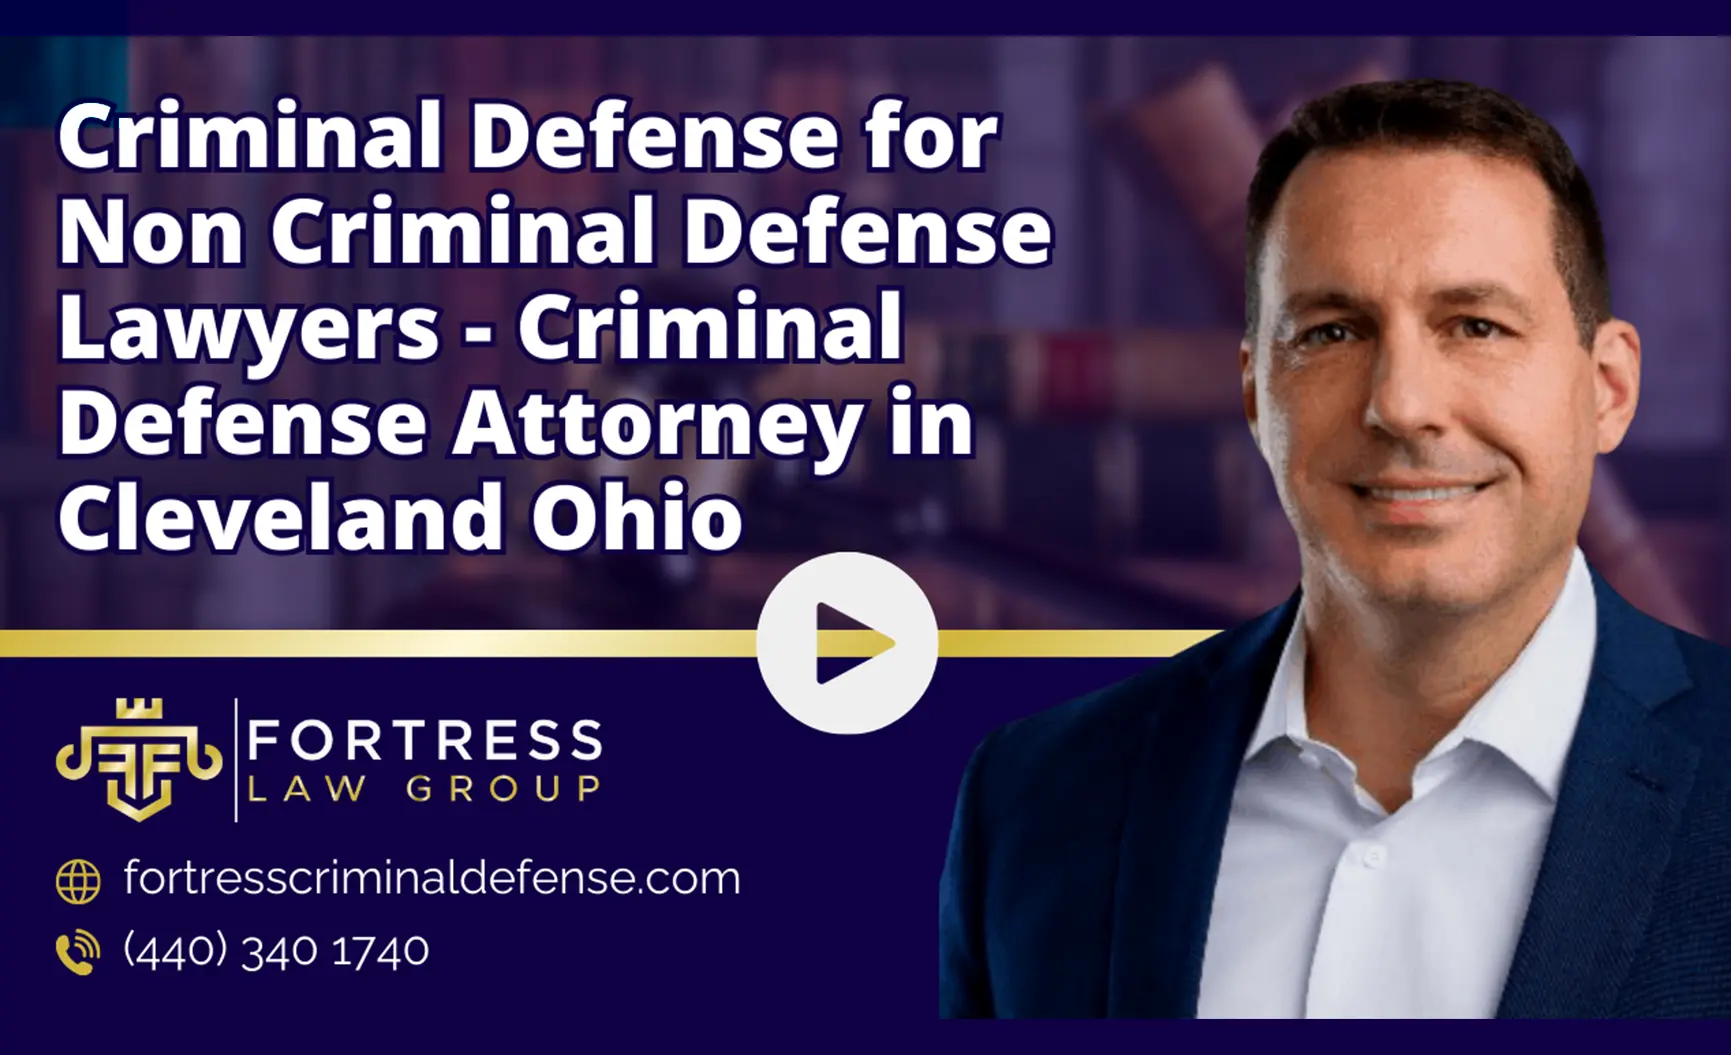 Criminal Defense for Non Criminal Defense Lawyers - Criminal Defense Attorney in Cleveland Ohio